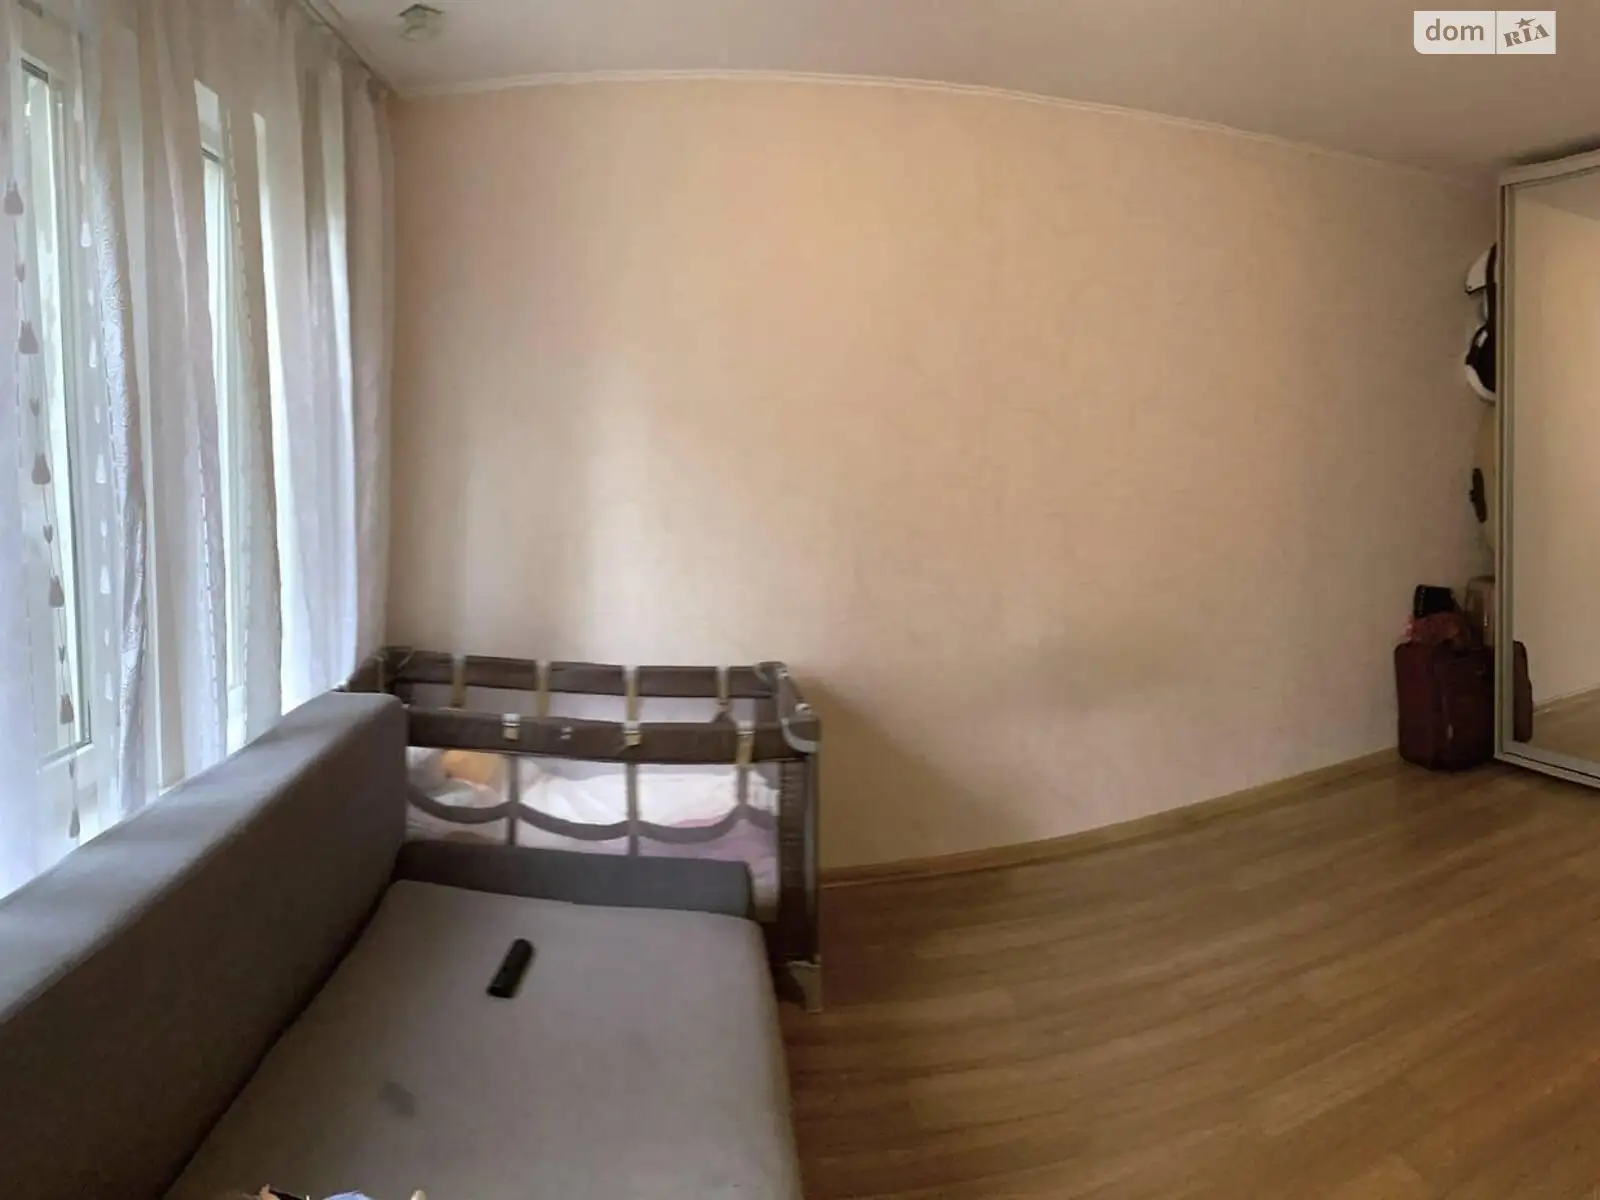 Продается комната 40 кв. м в Черноморске, цена: 22500 $ - фото 1